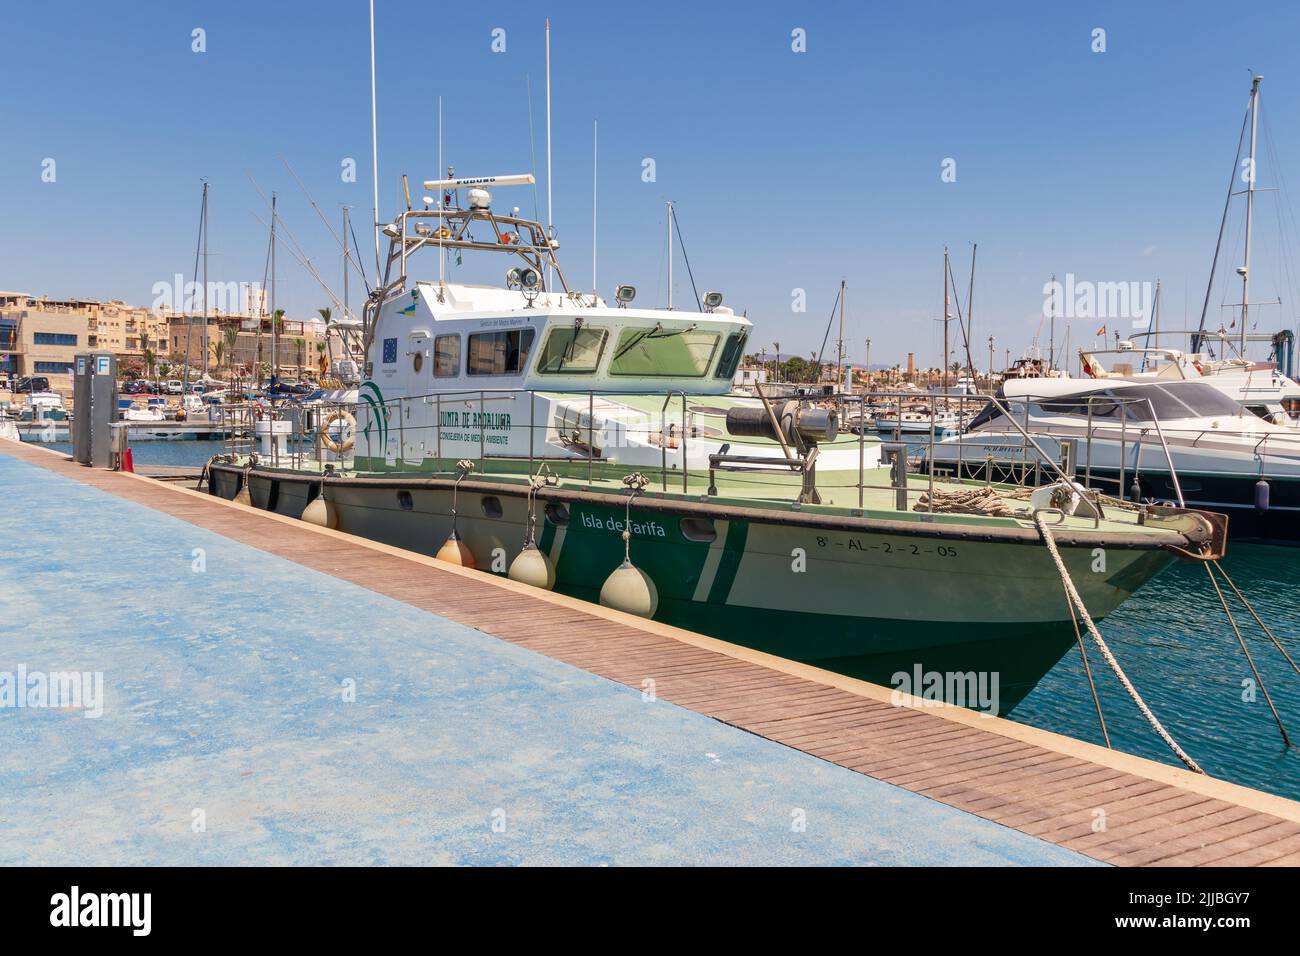 Junta De Andalucia Vessel Docked at Garrucha Port Almeria province, Andalucía, Spain Stock Photo